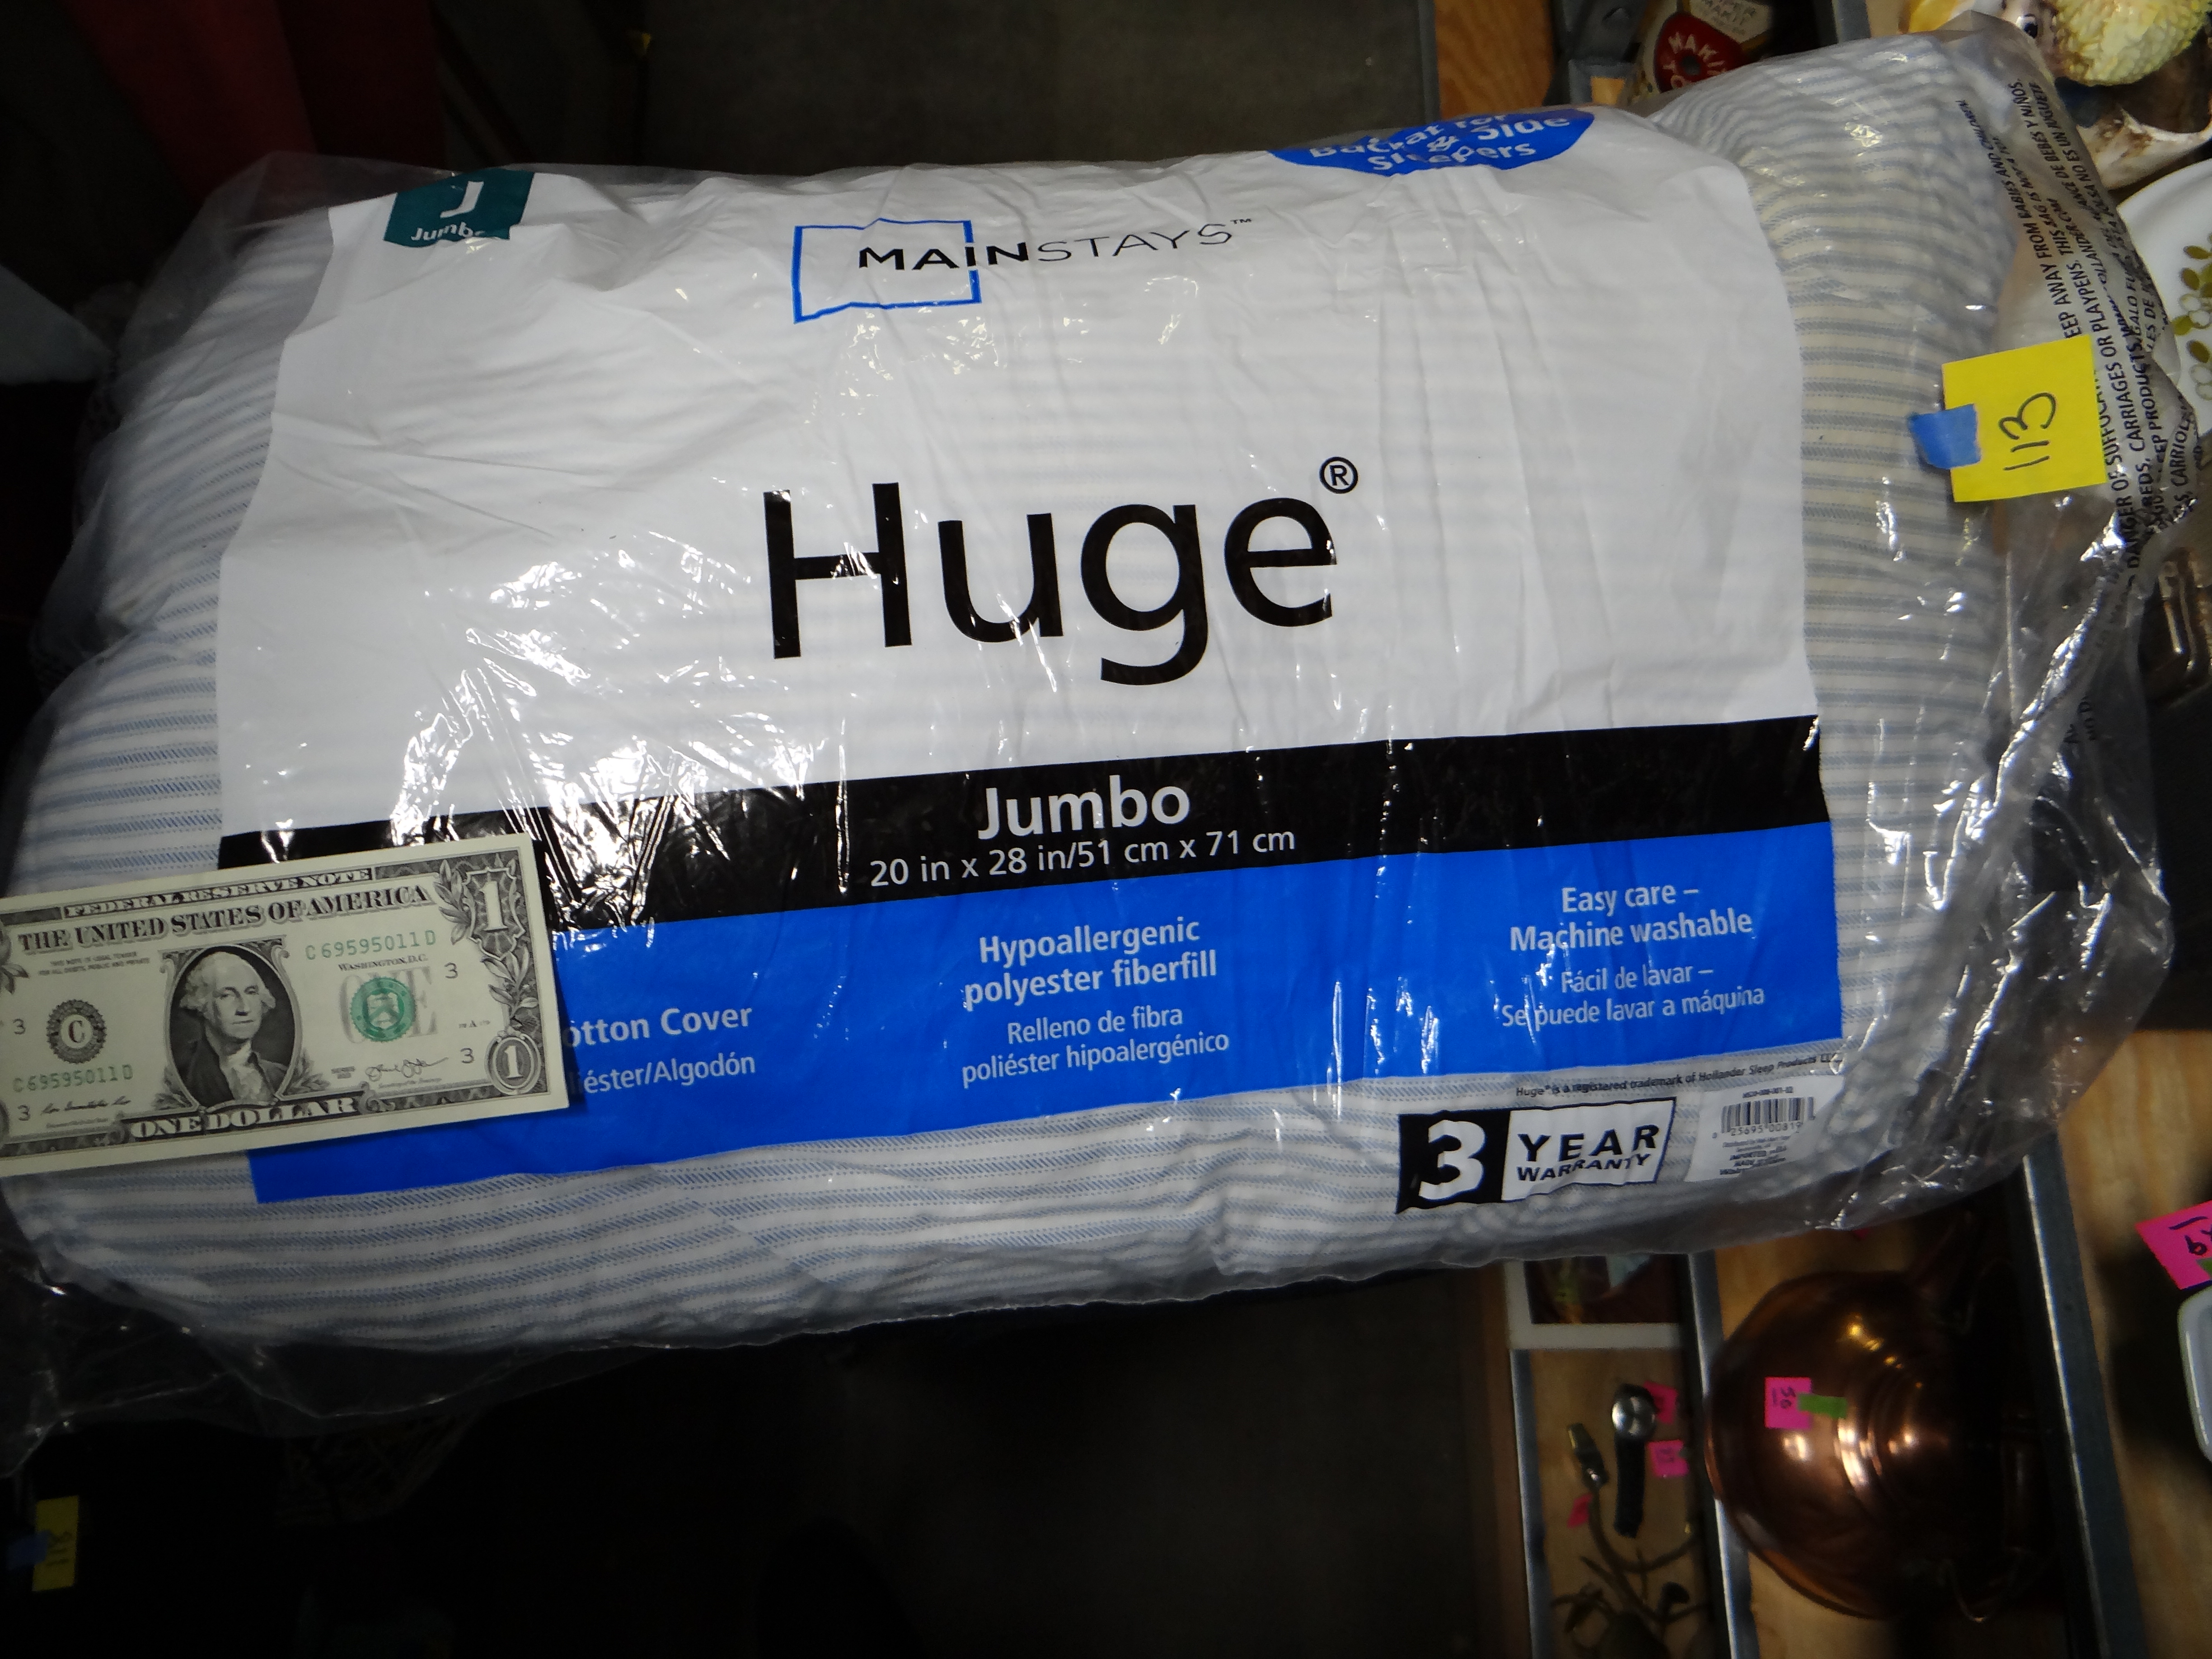 113-Mainstays Jumbo Size Pillow (has some moisture marks)